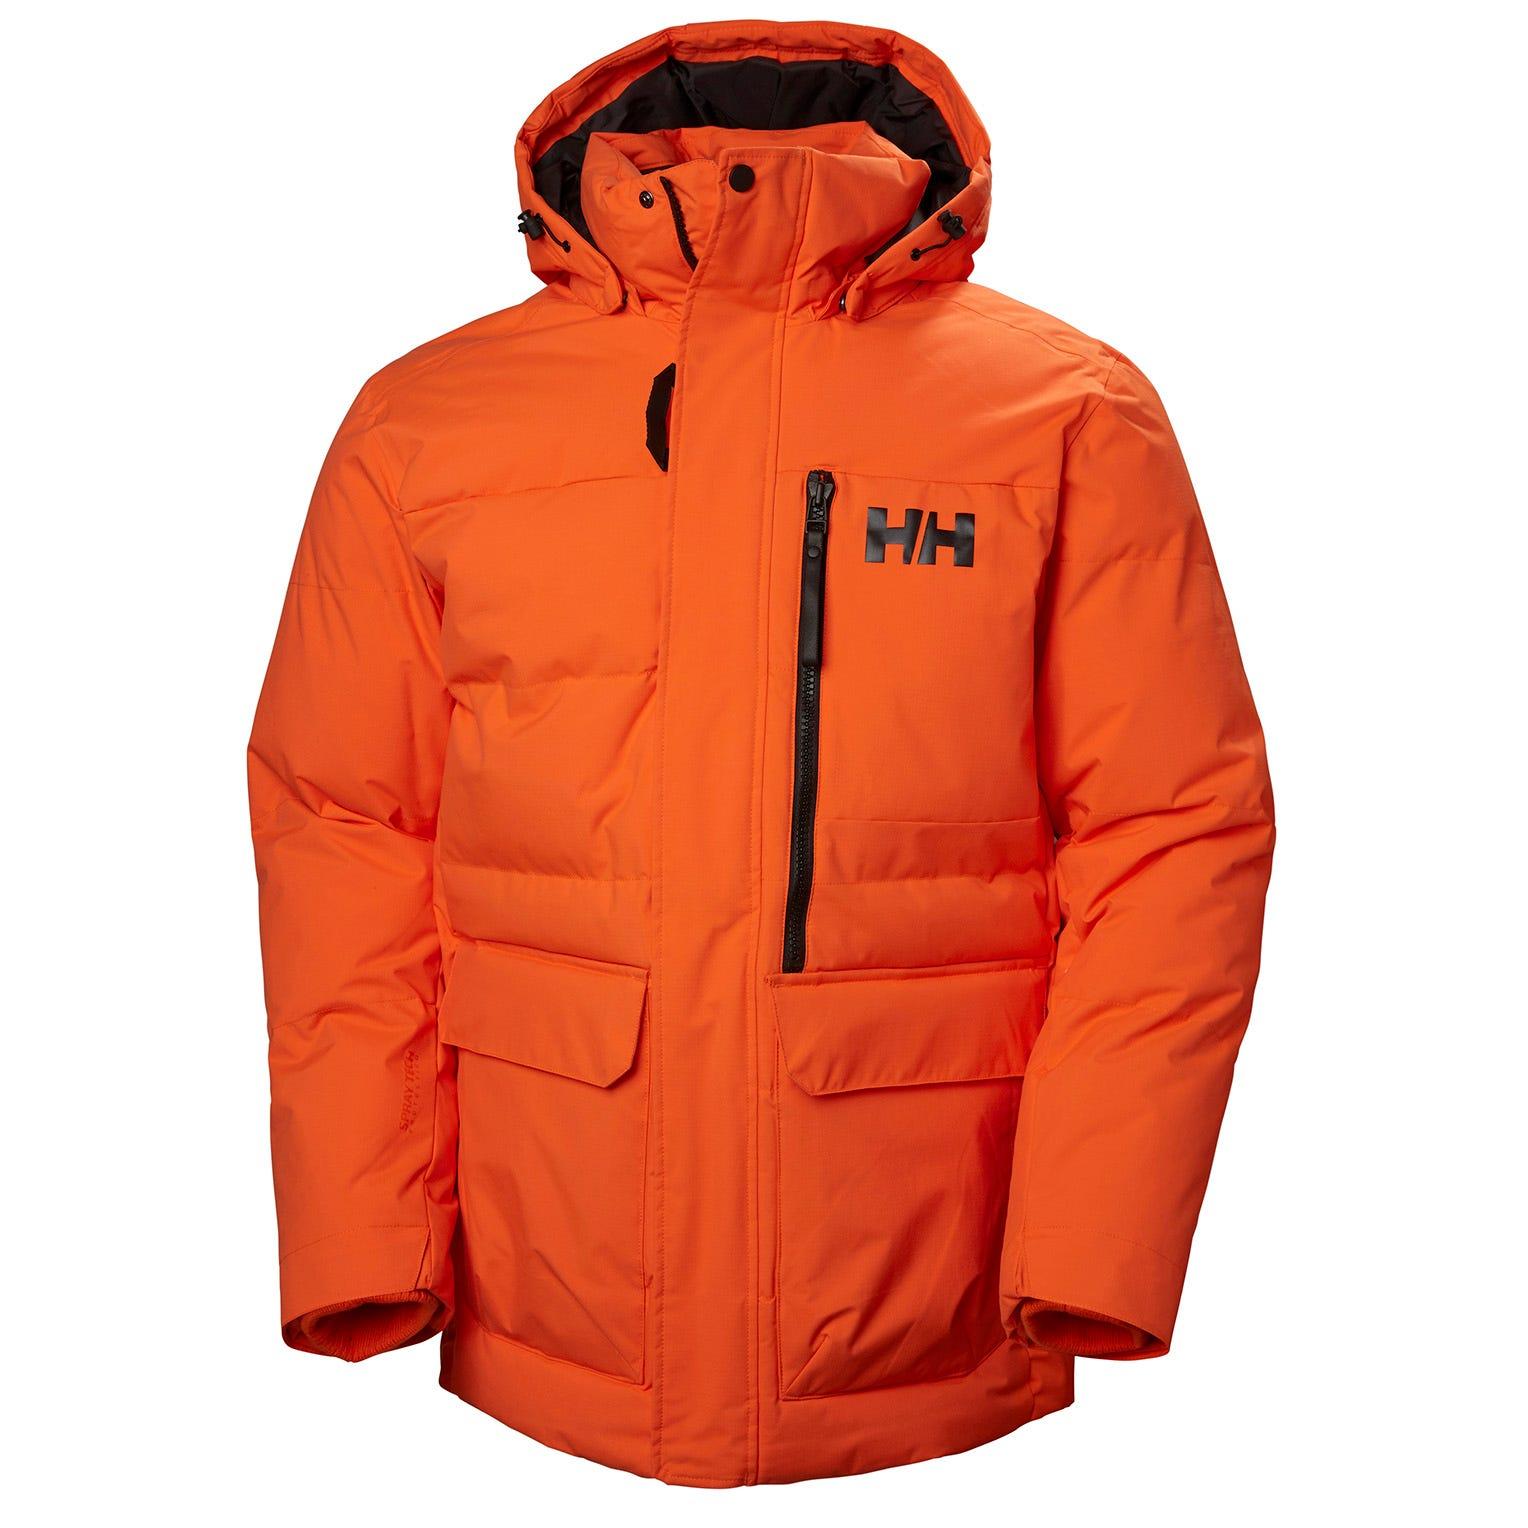 Helly Hansen Tromsoe Jacket Parka Yellow in Orange for Men - Save 60% ...